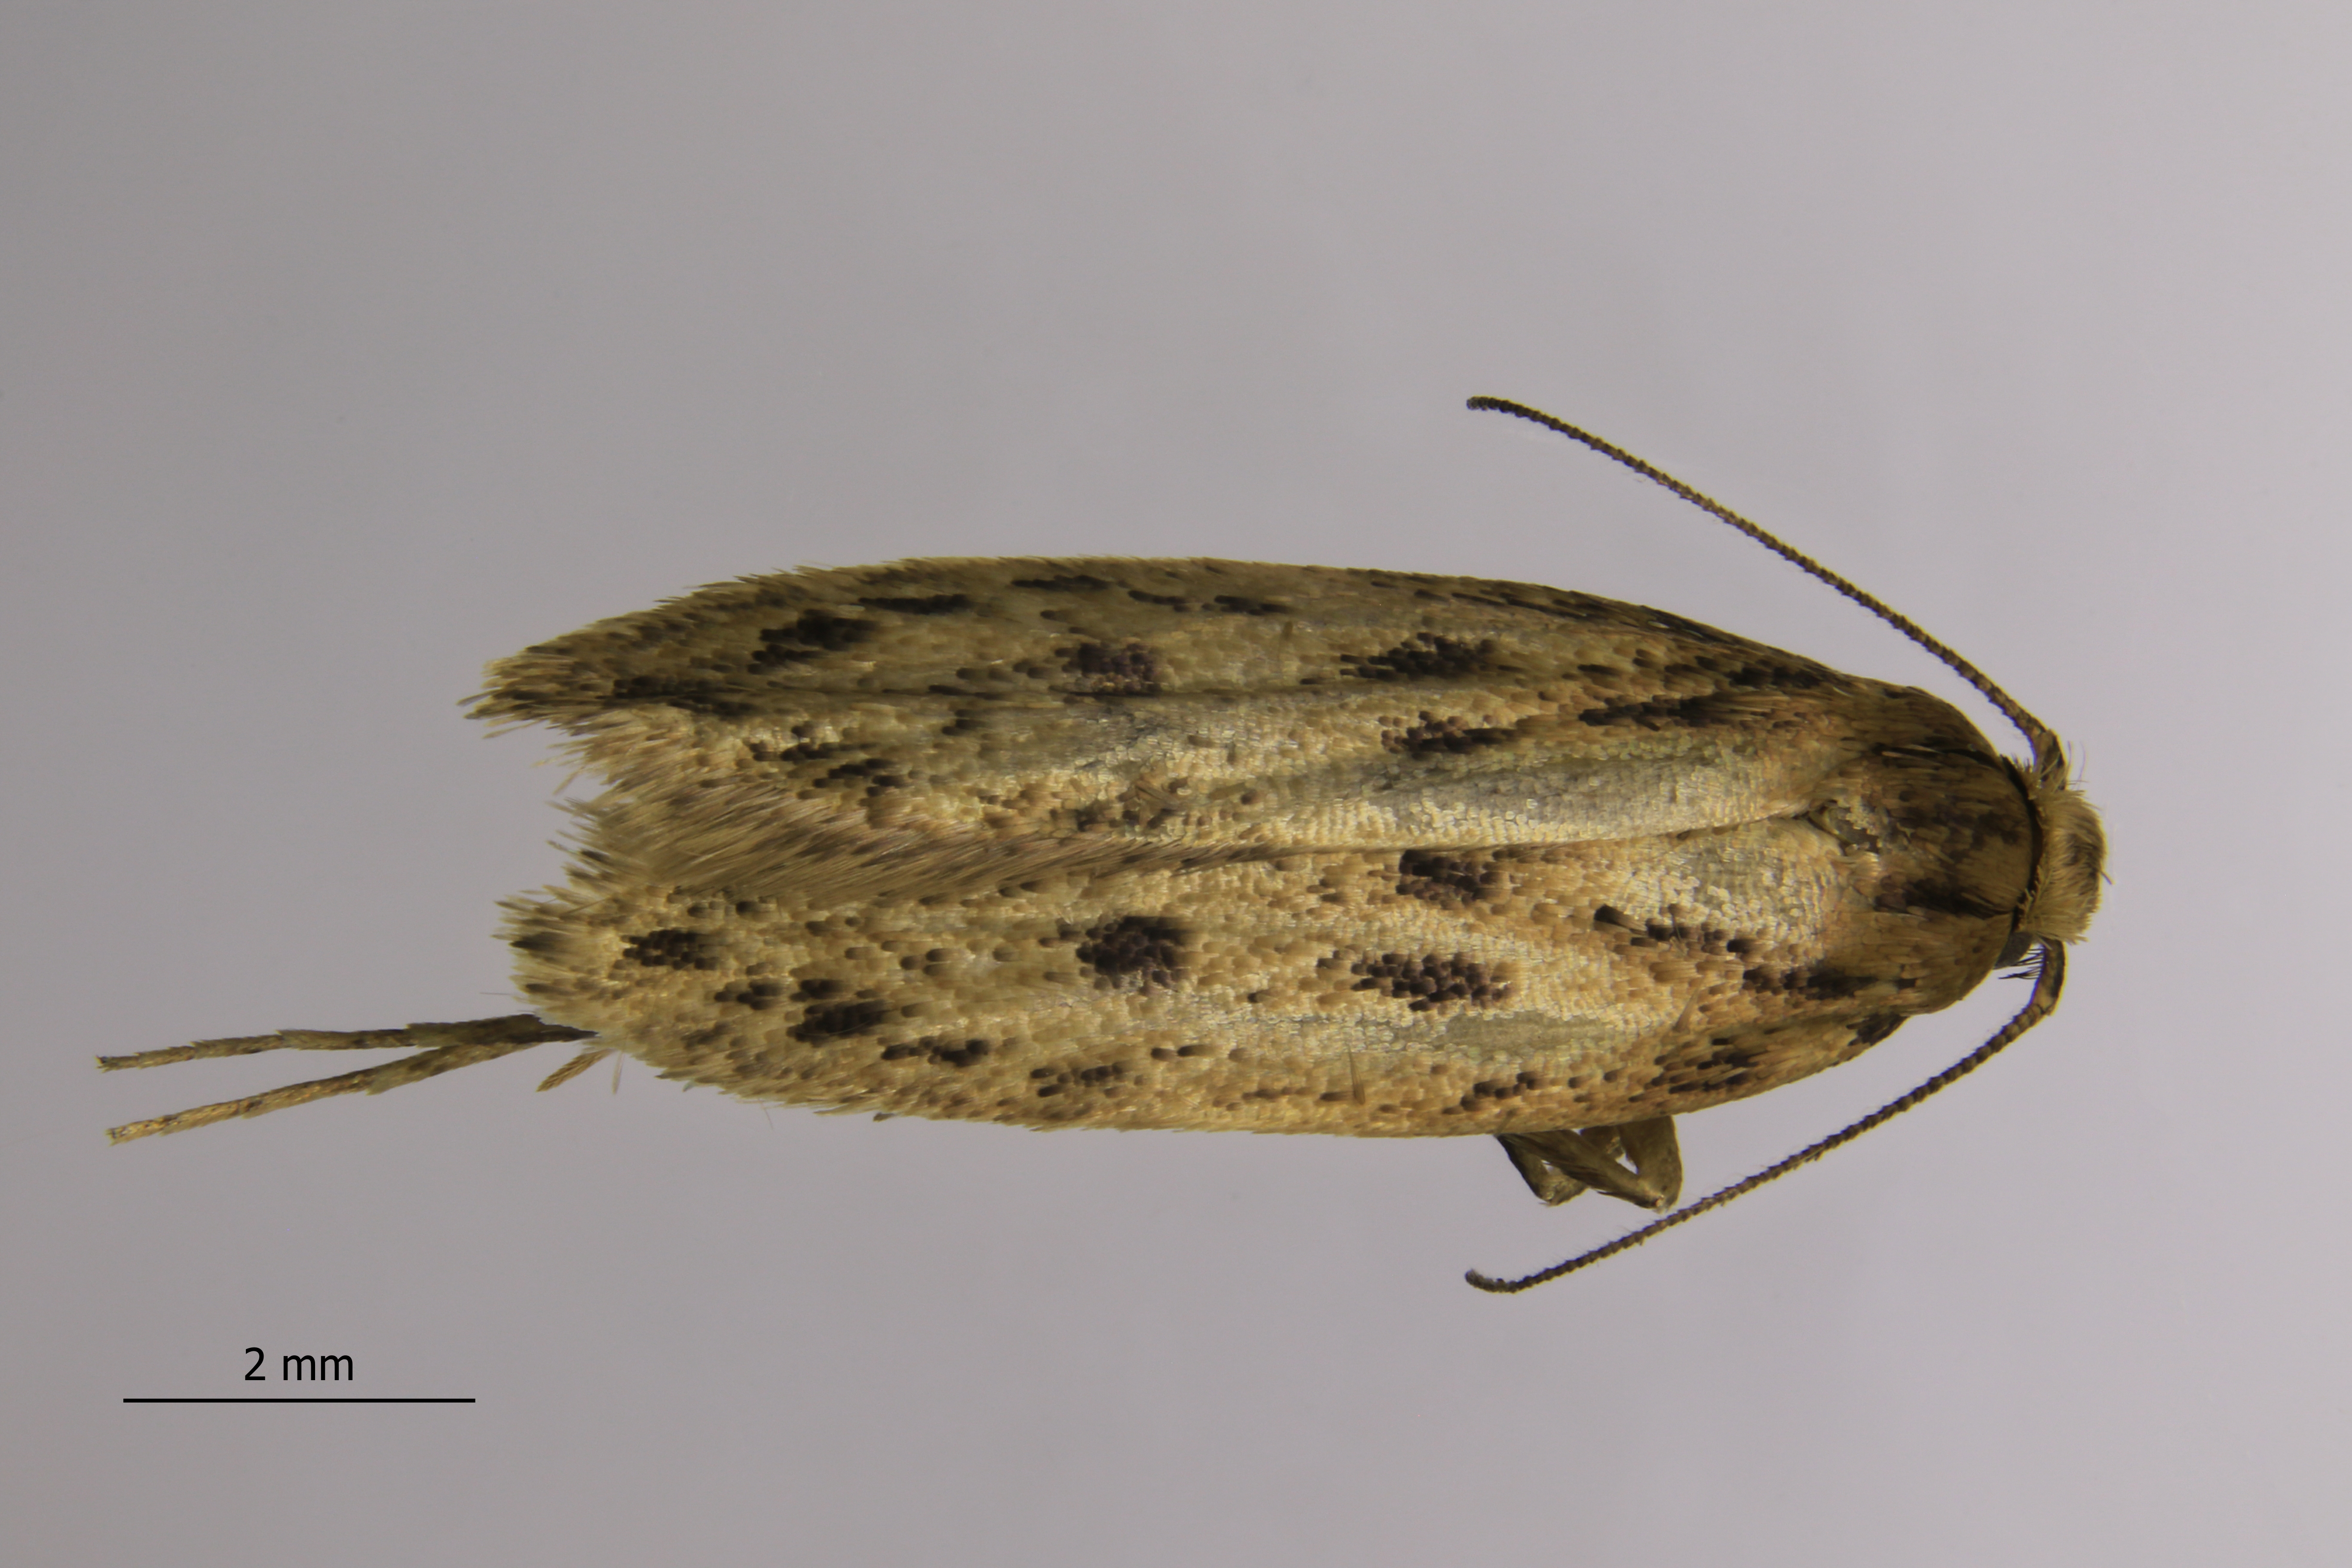 Specimen of a Brown House moth